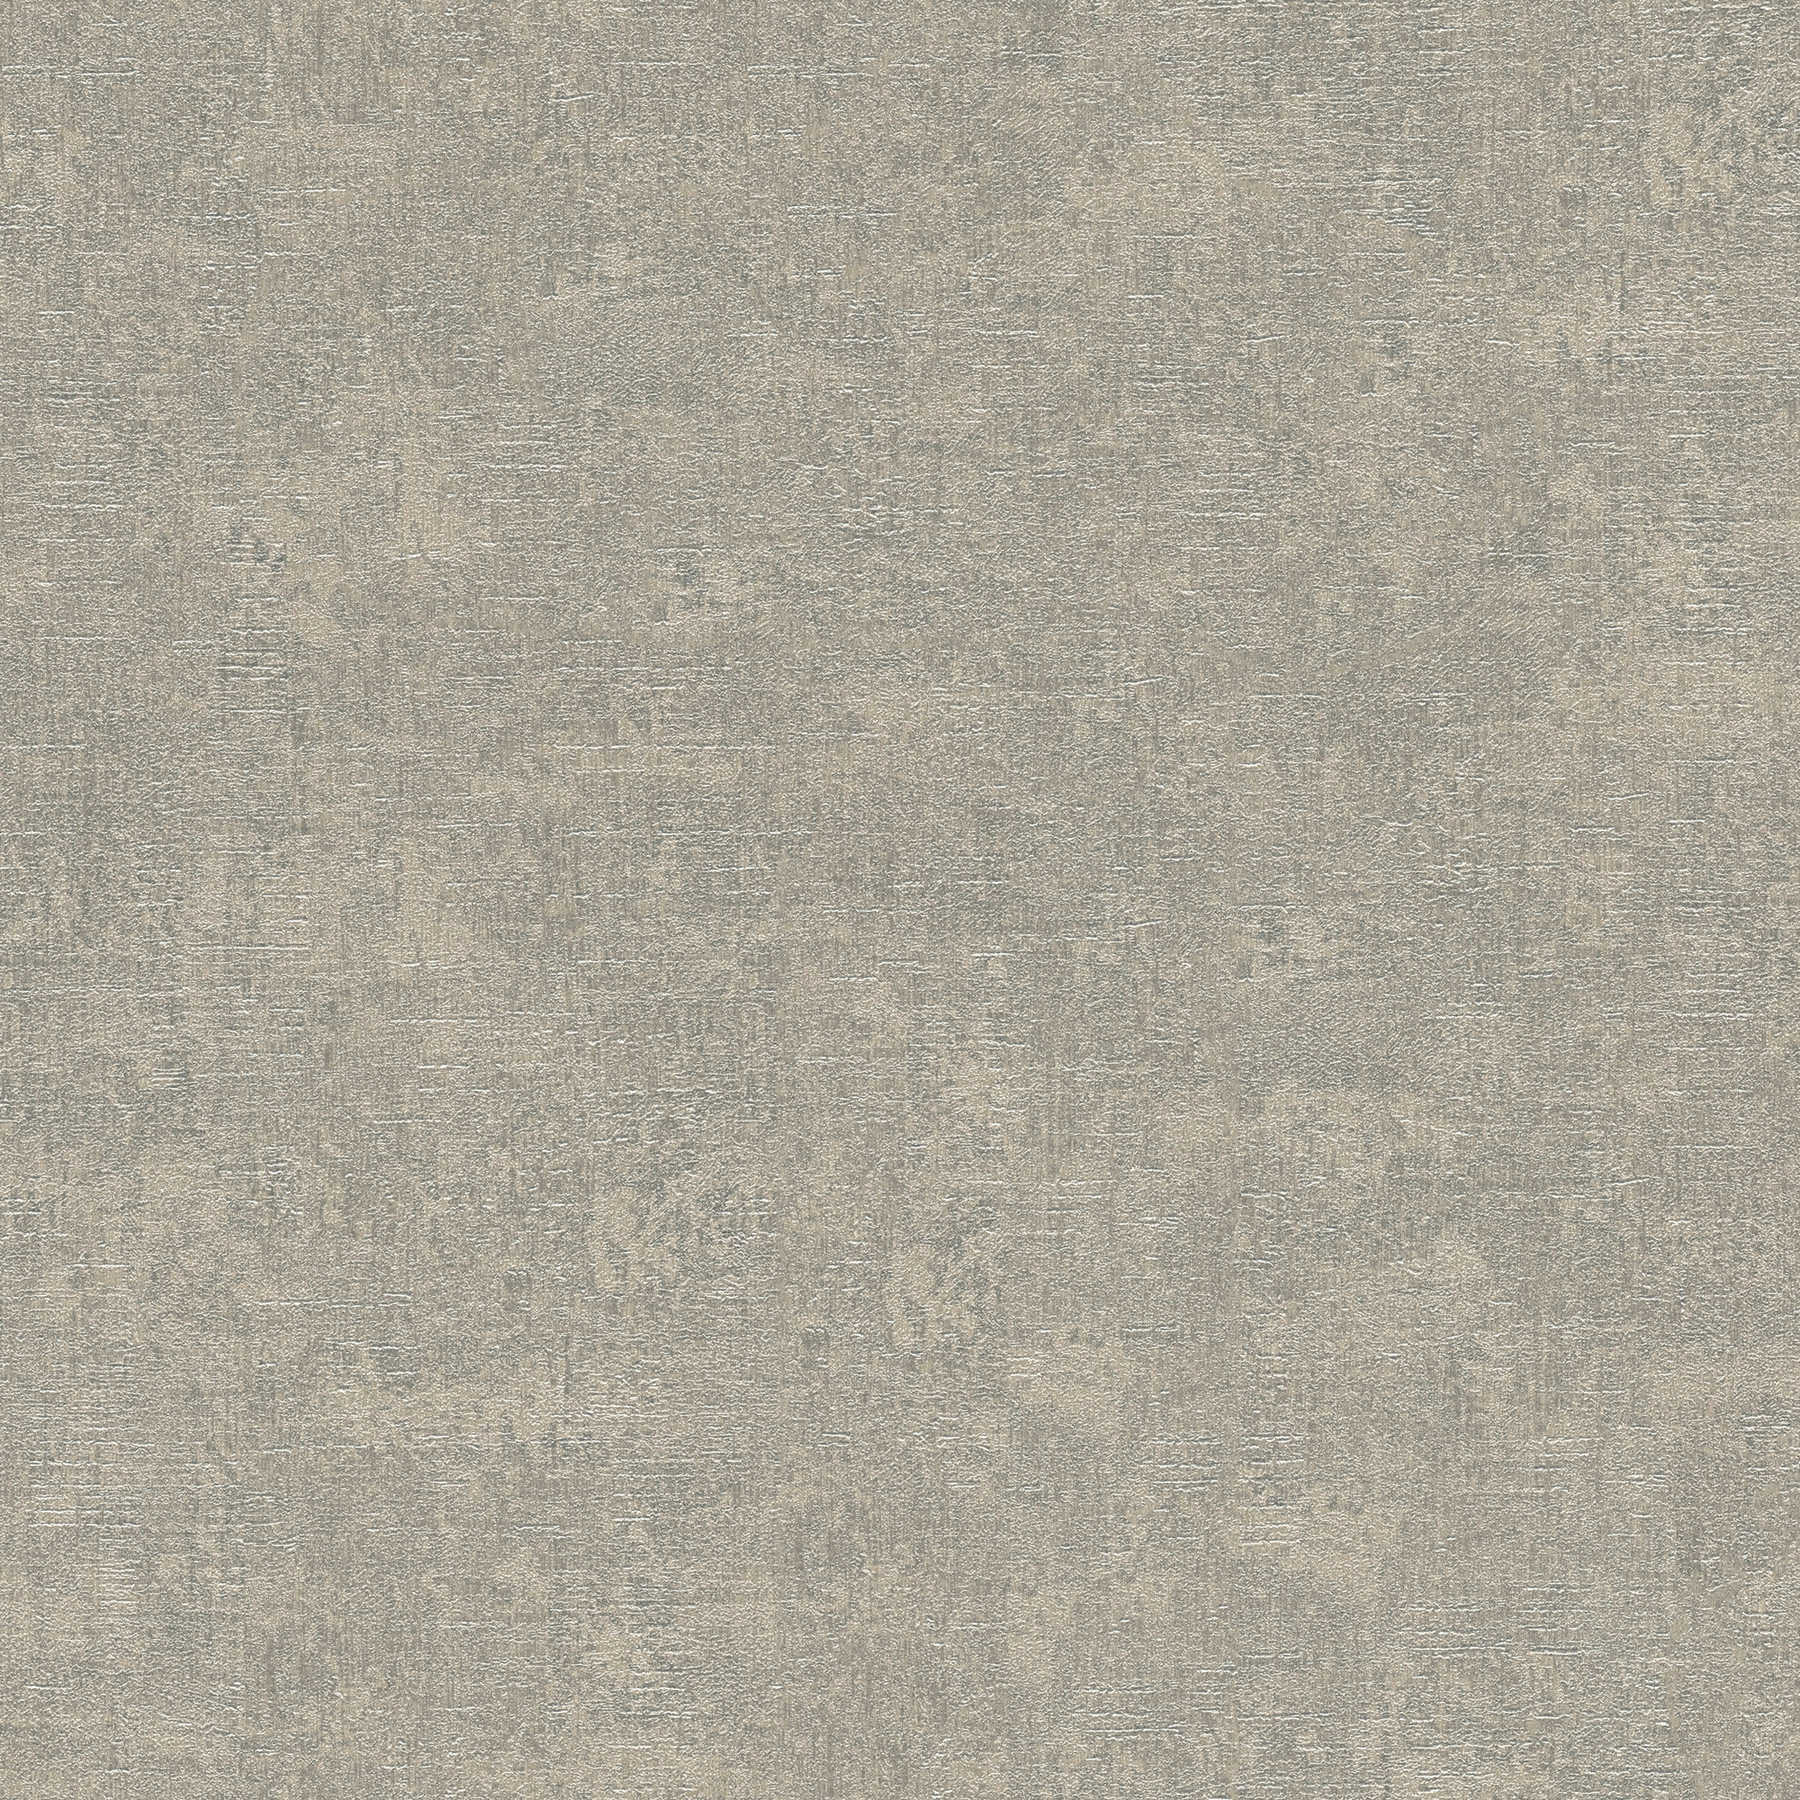 Silver grey plain wallpaper with concrete plaster look - beige, grey
